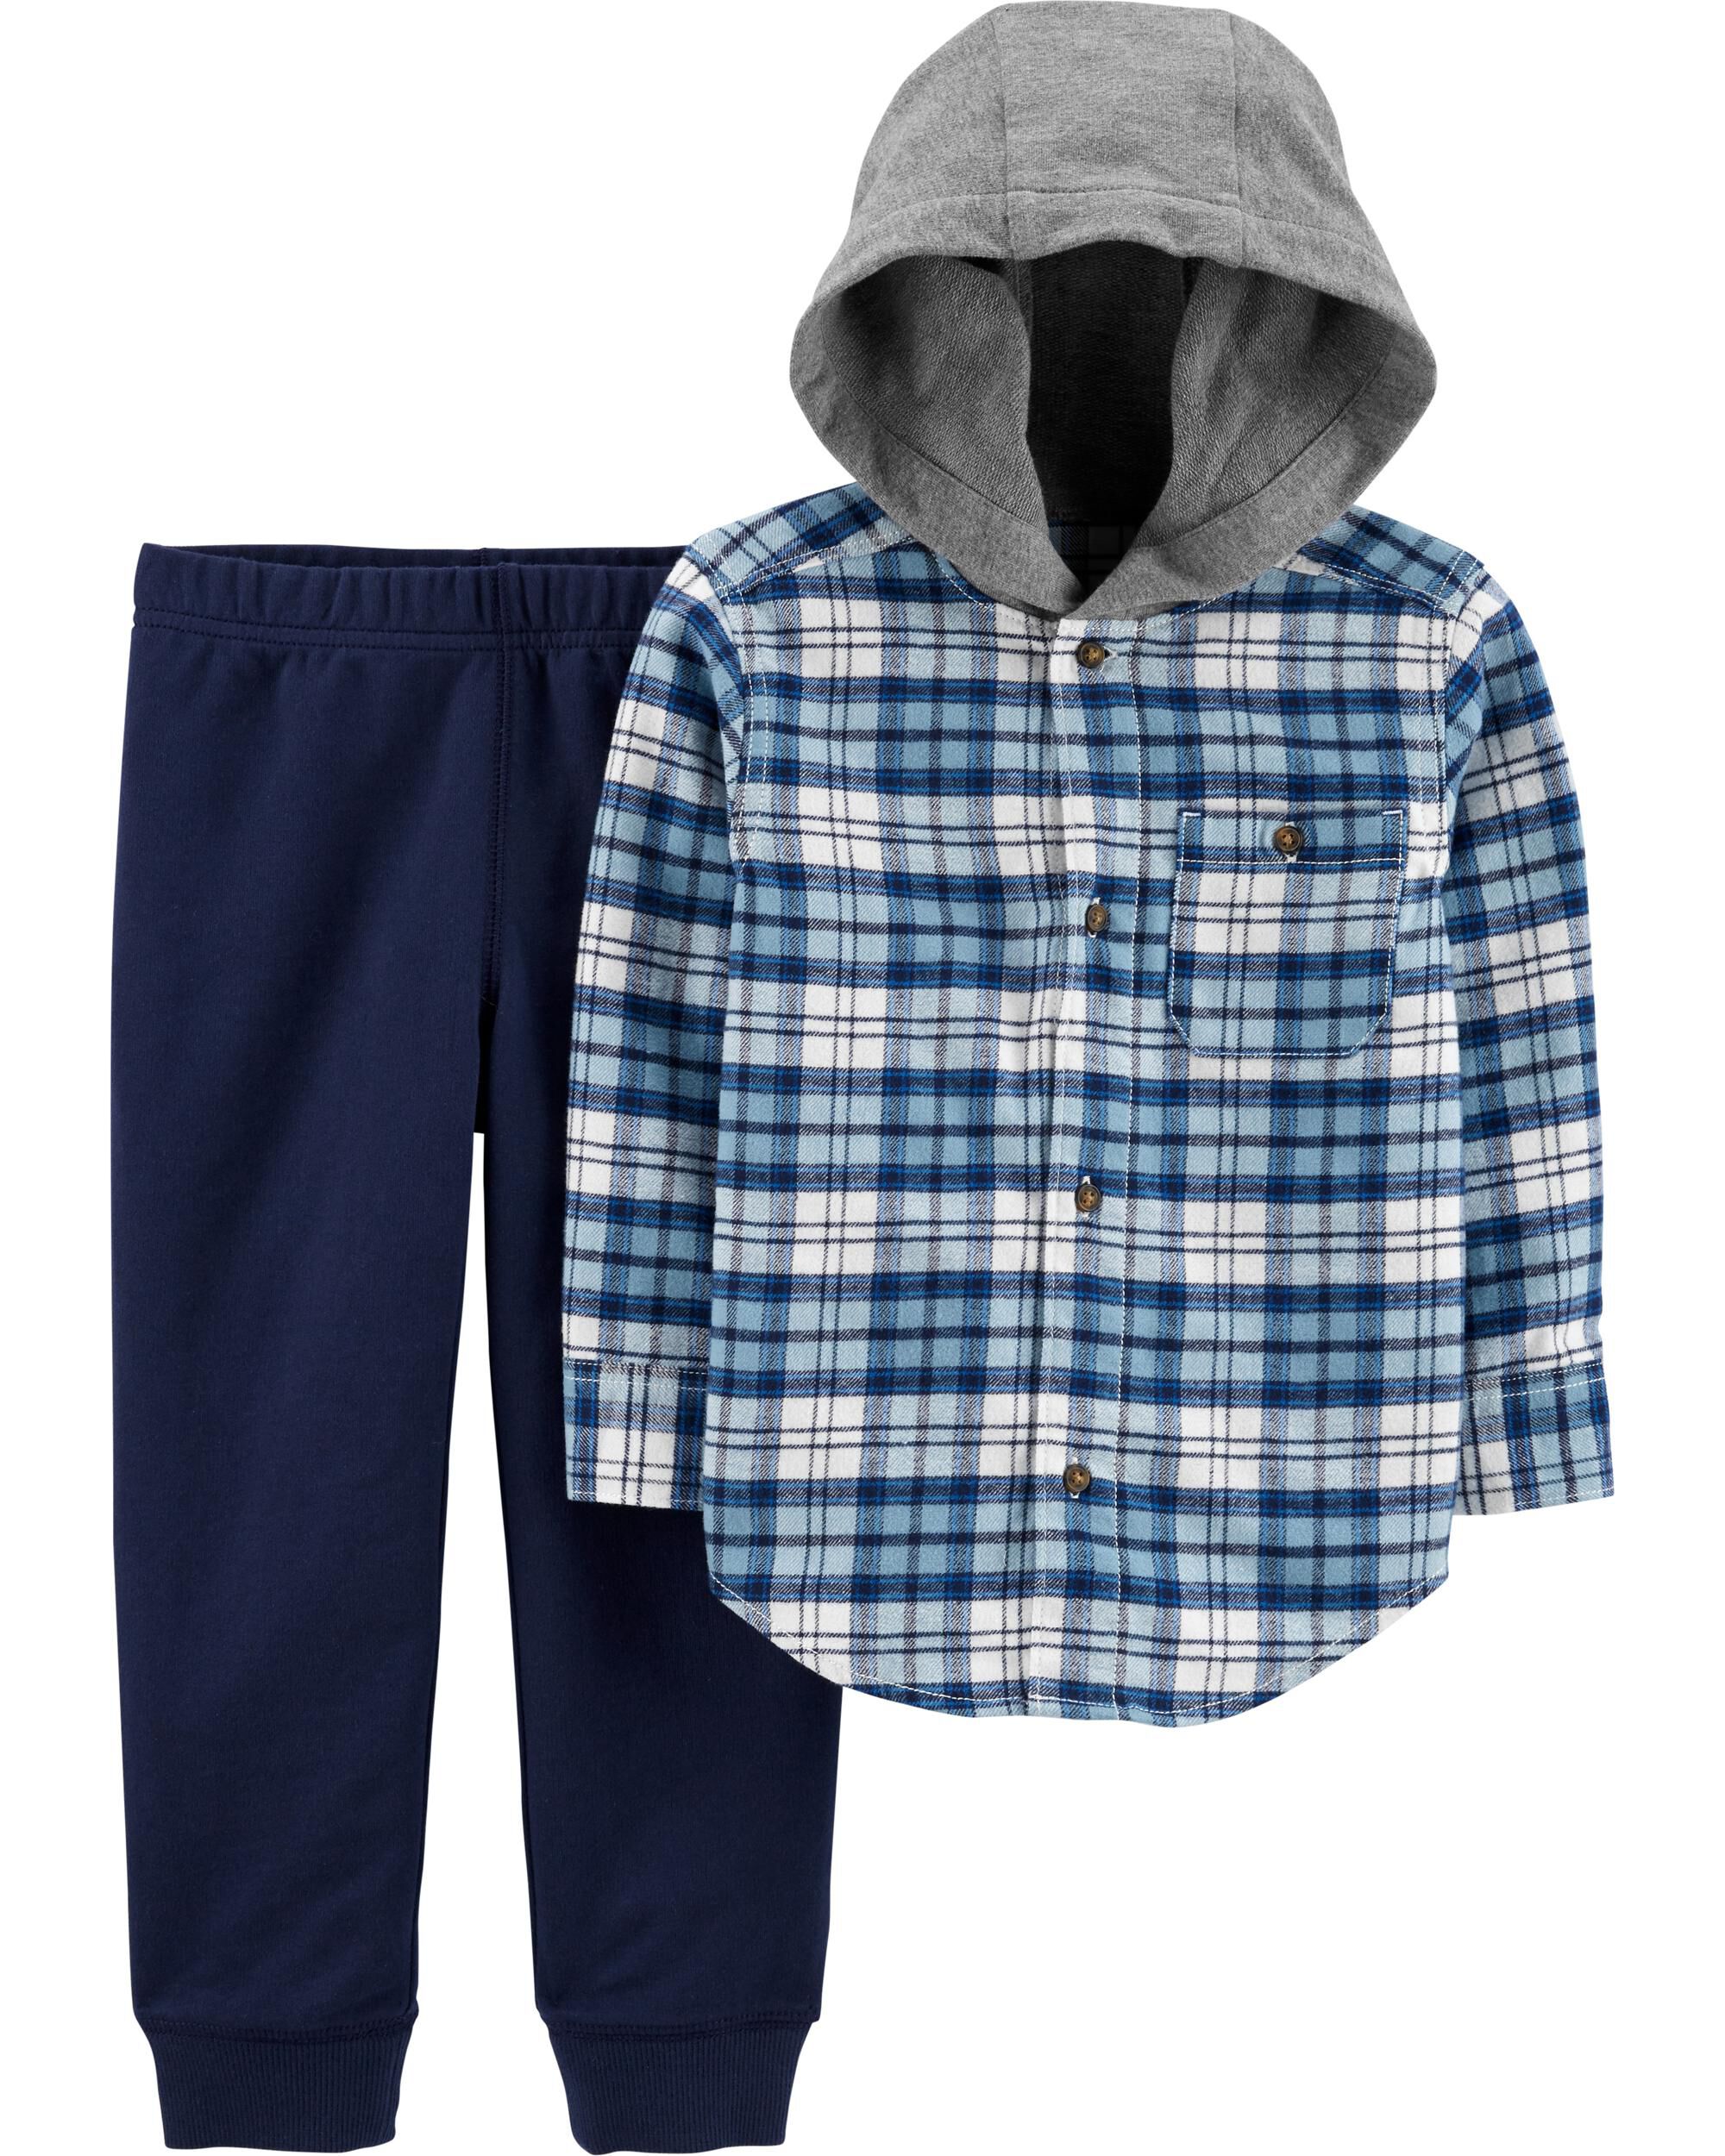 Carter’s Boys 2-Piece Hooded Button-Front Shirt & Jogger Set.size 5T